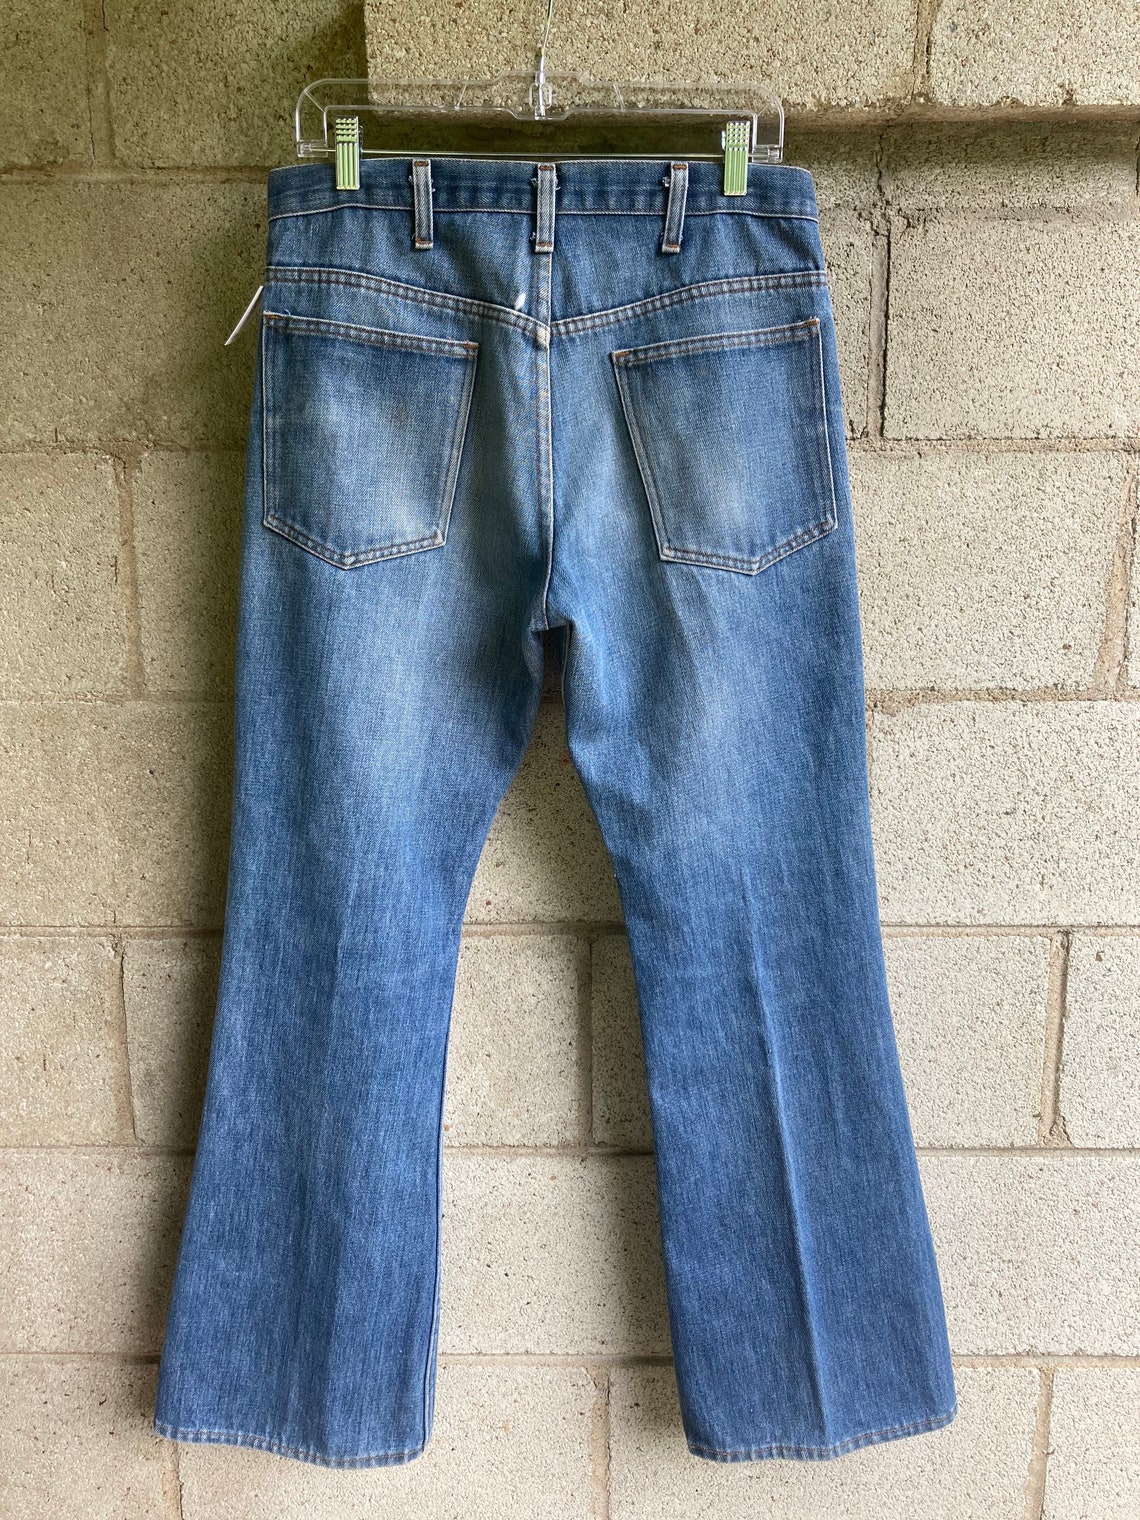 Vintage high rise flare leg jeans | Etsy